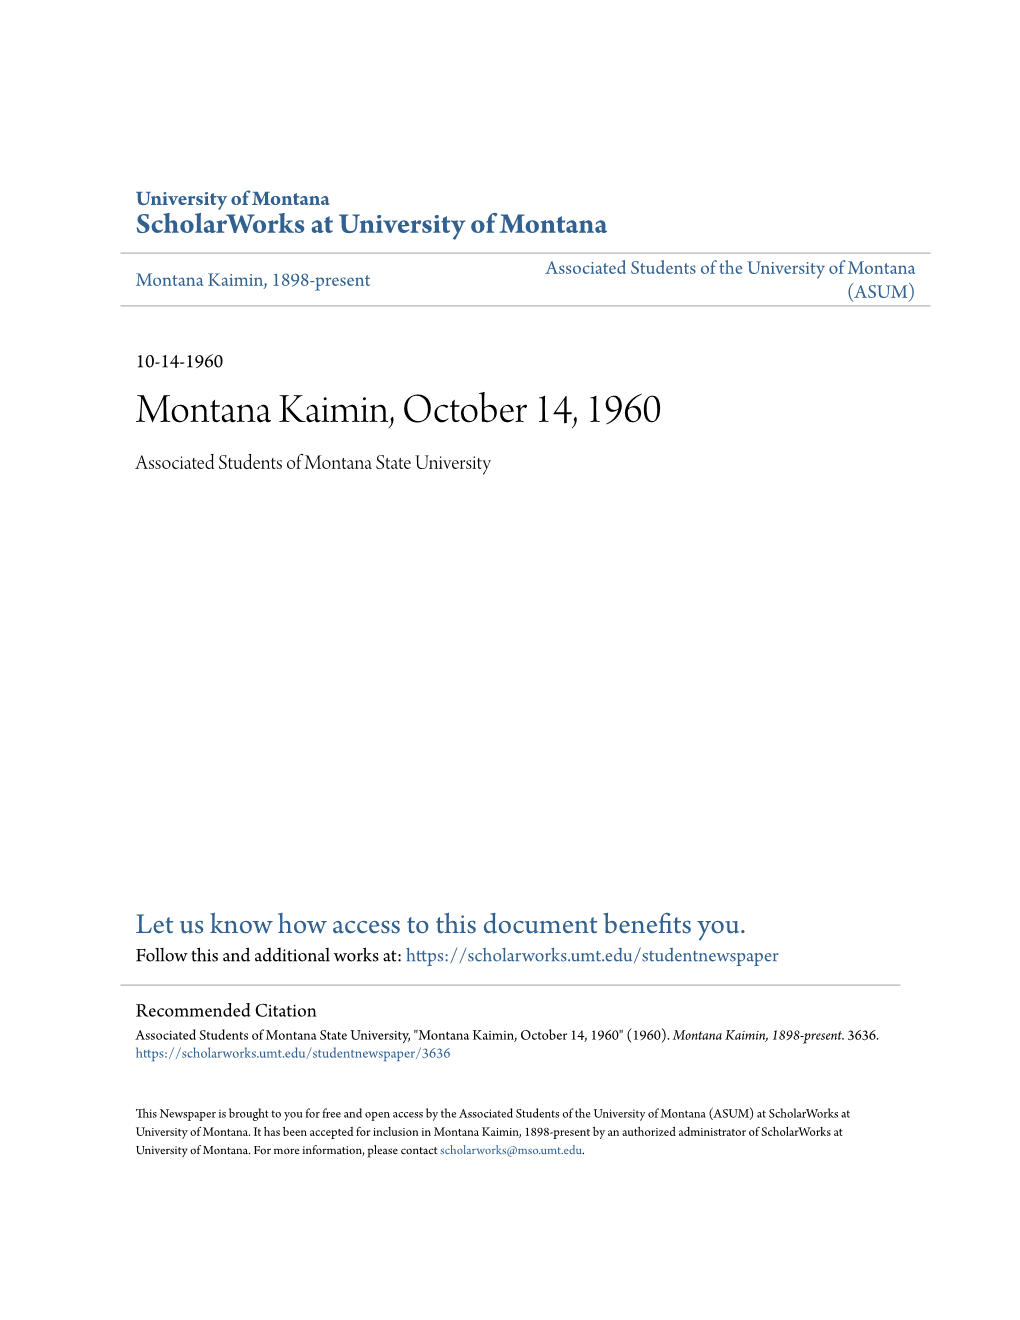 Montana Kaimin, October 14, 1960 Associated Students of Montana State University